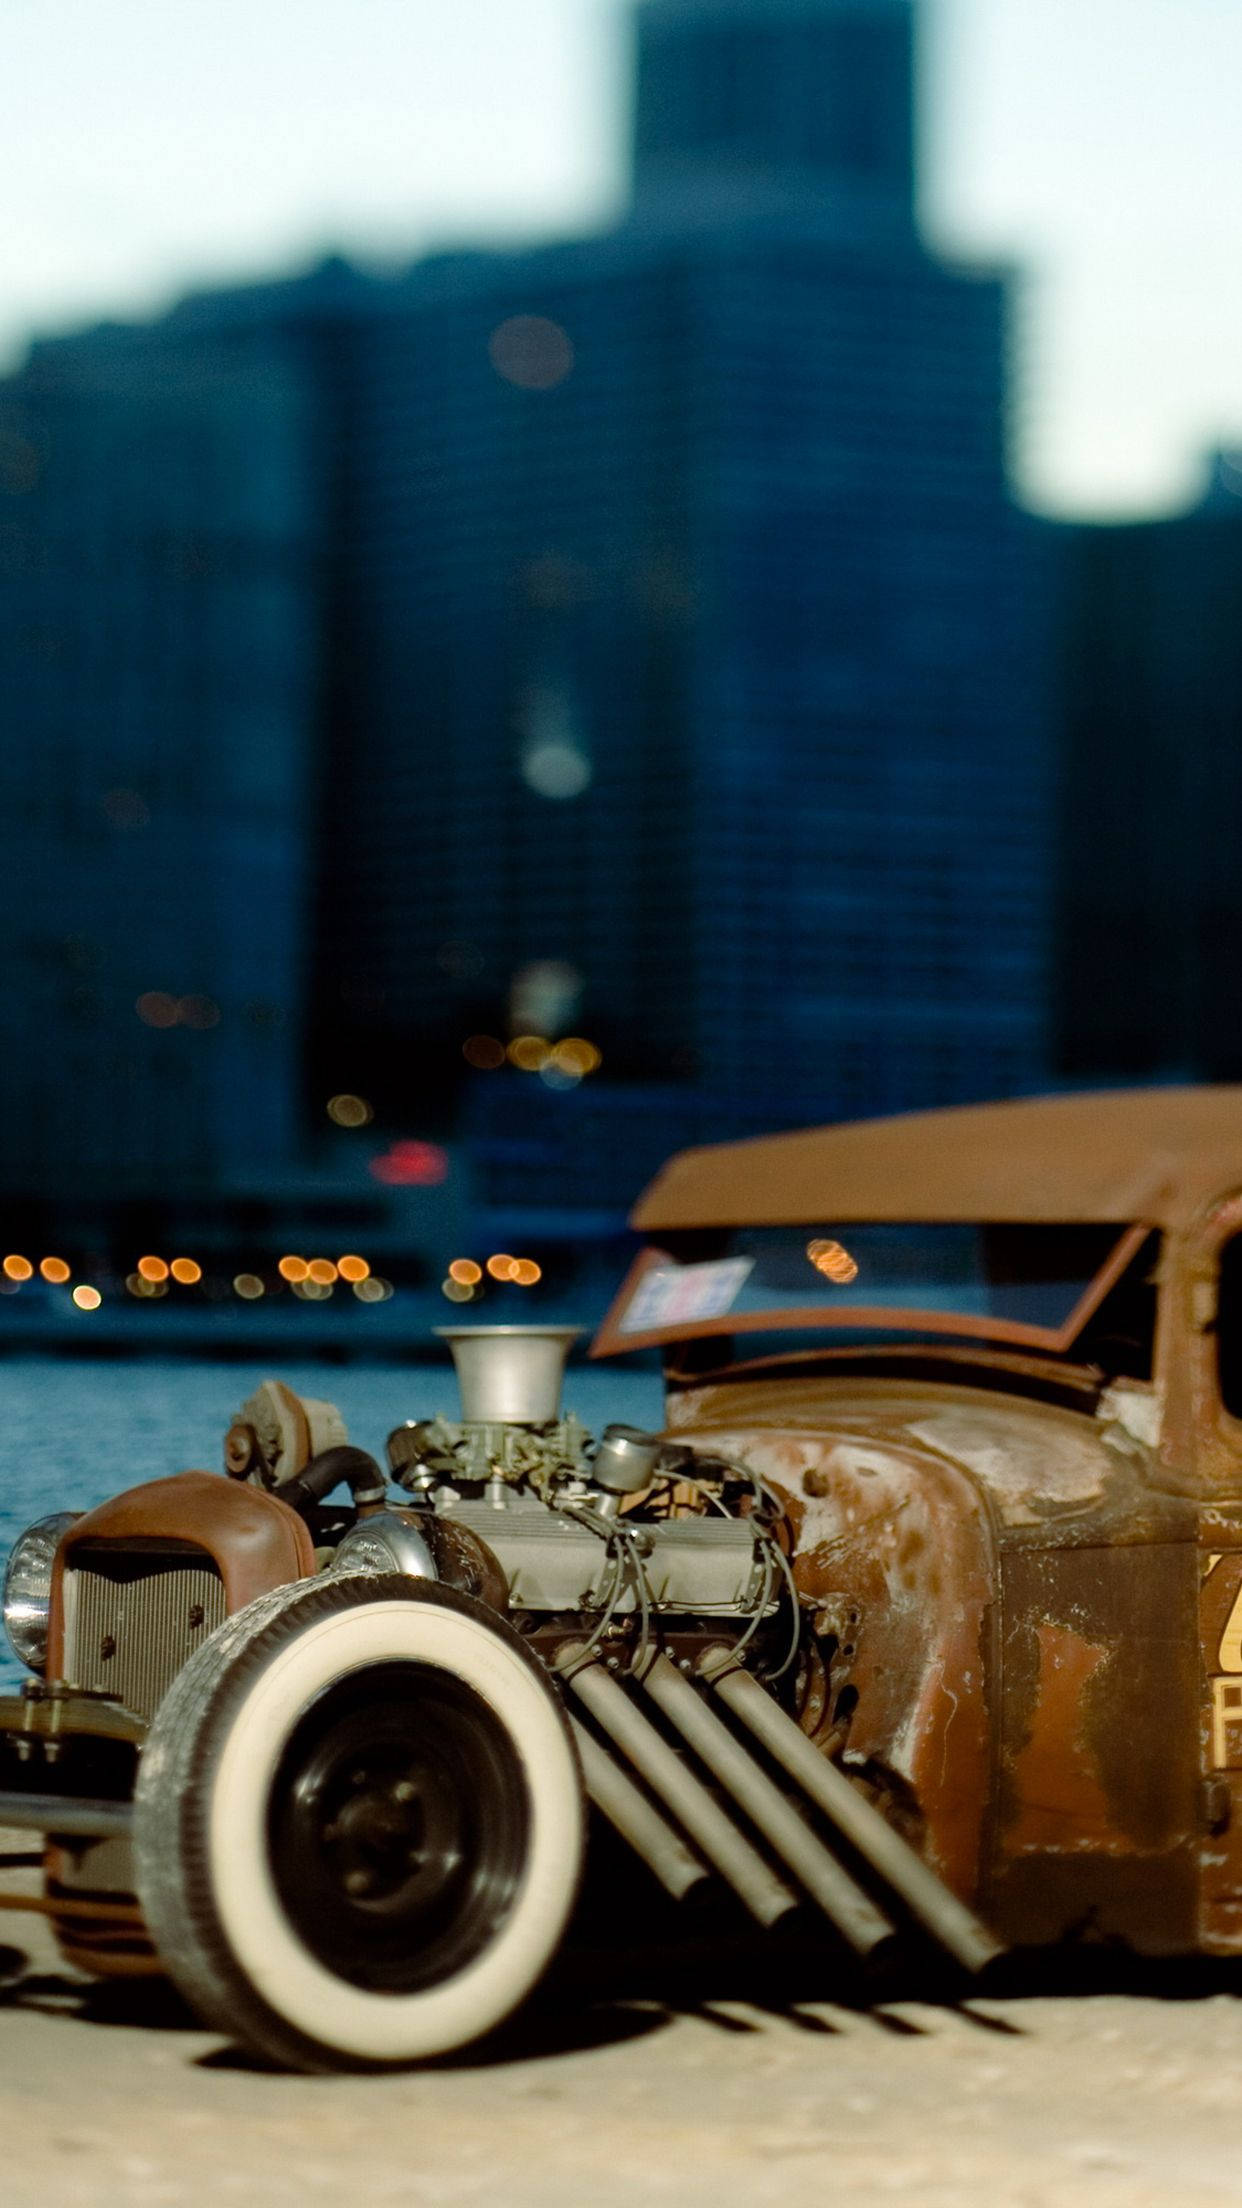 Caption: Vintage Rat Rod Car In City Sunset Background